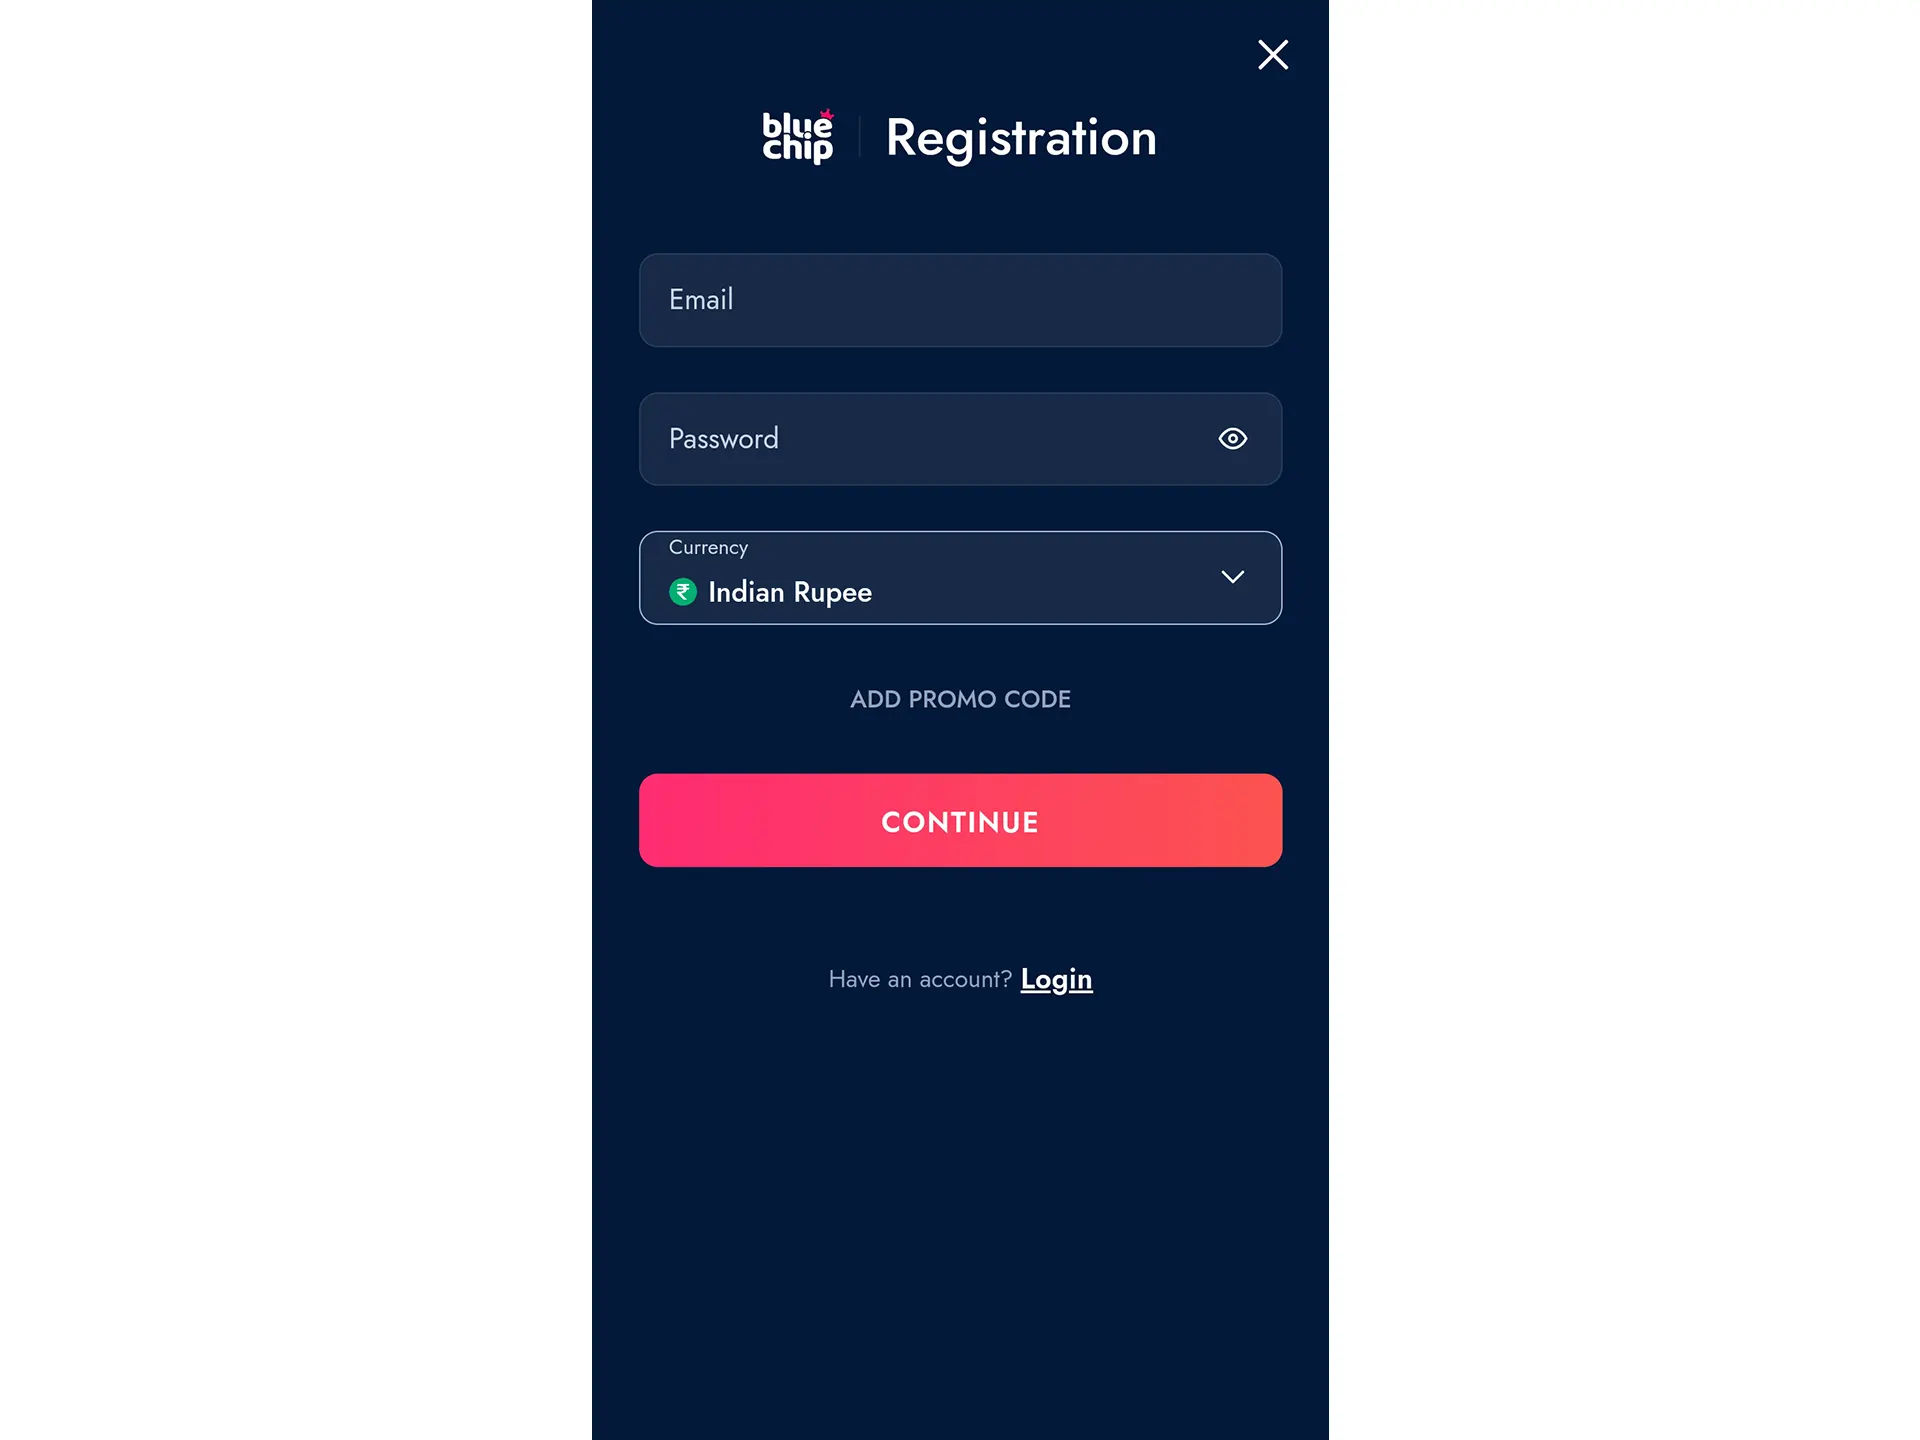 Start registration by pressing on registration button.